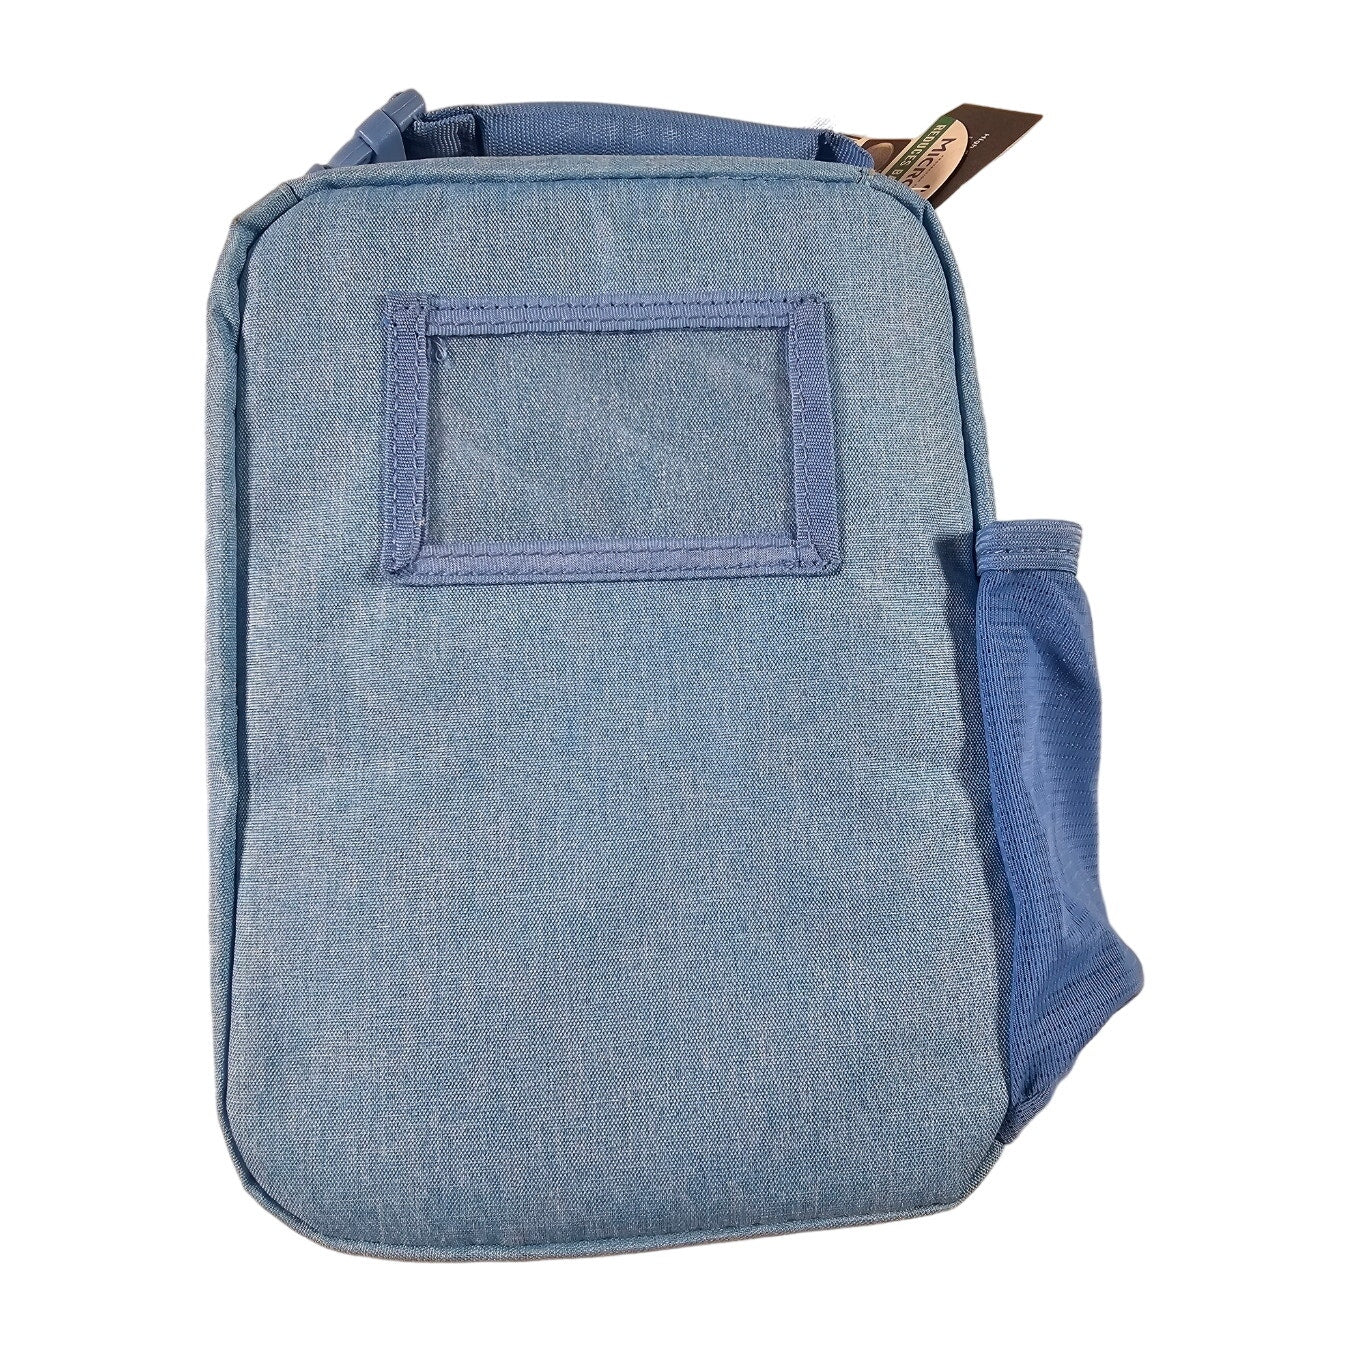 Fulton Bag Co. Upright Lunch Bag - Tranquil Blue